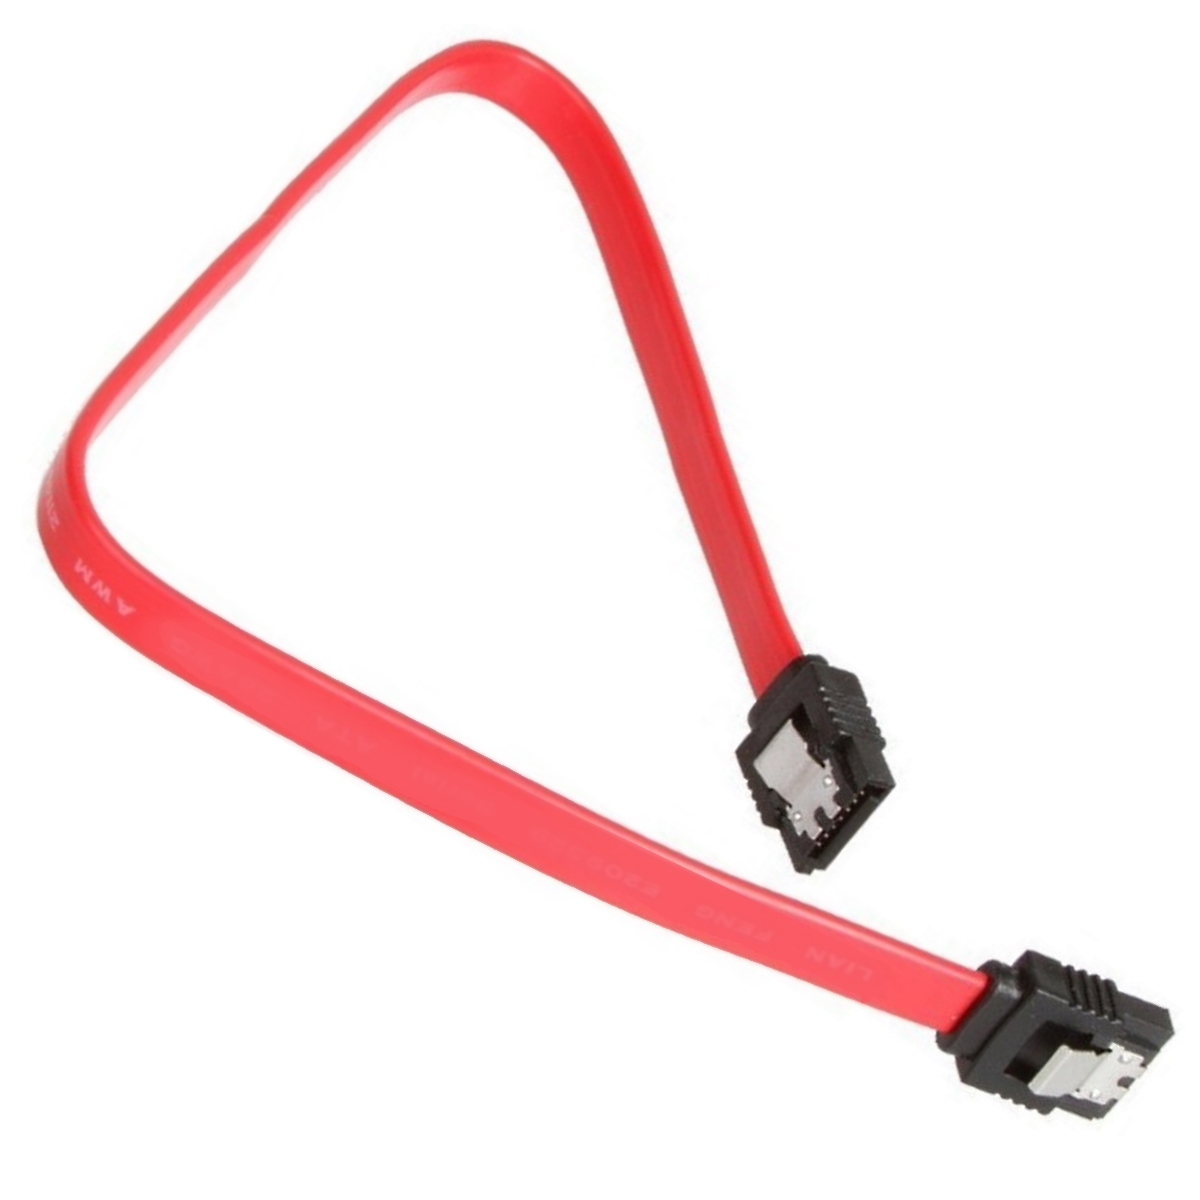 Cable De Poder Tipo 8 - 1.8 M Para Grabadora,impresoras,tv